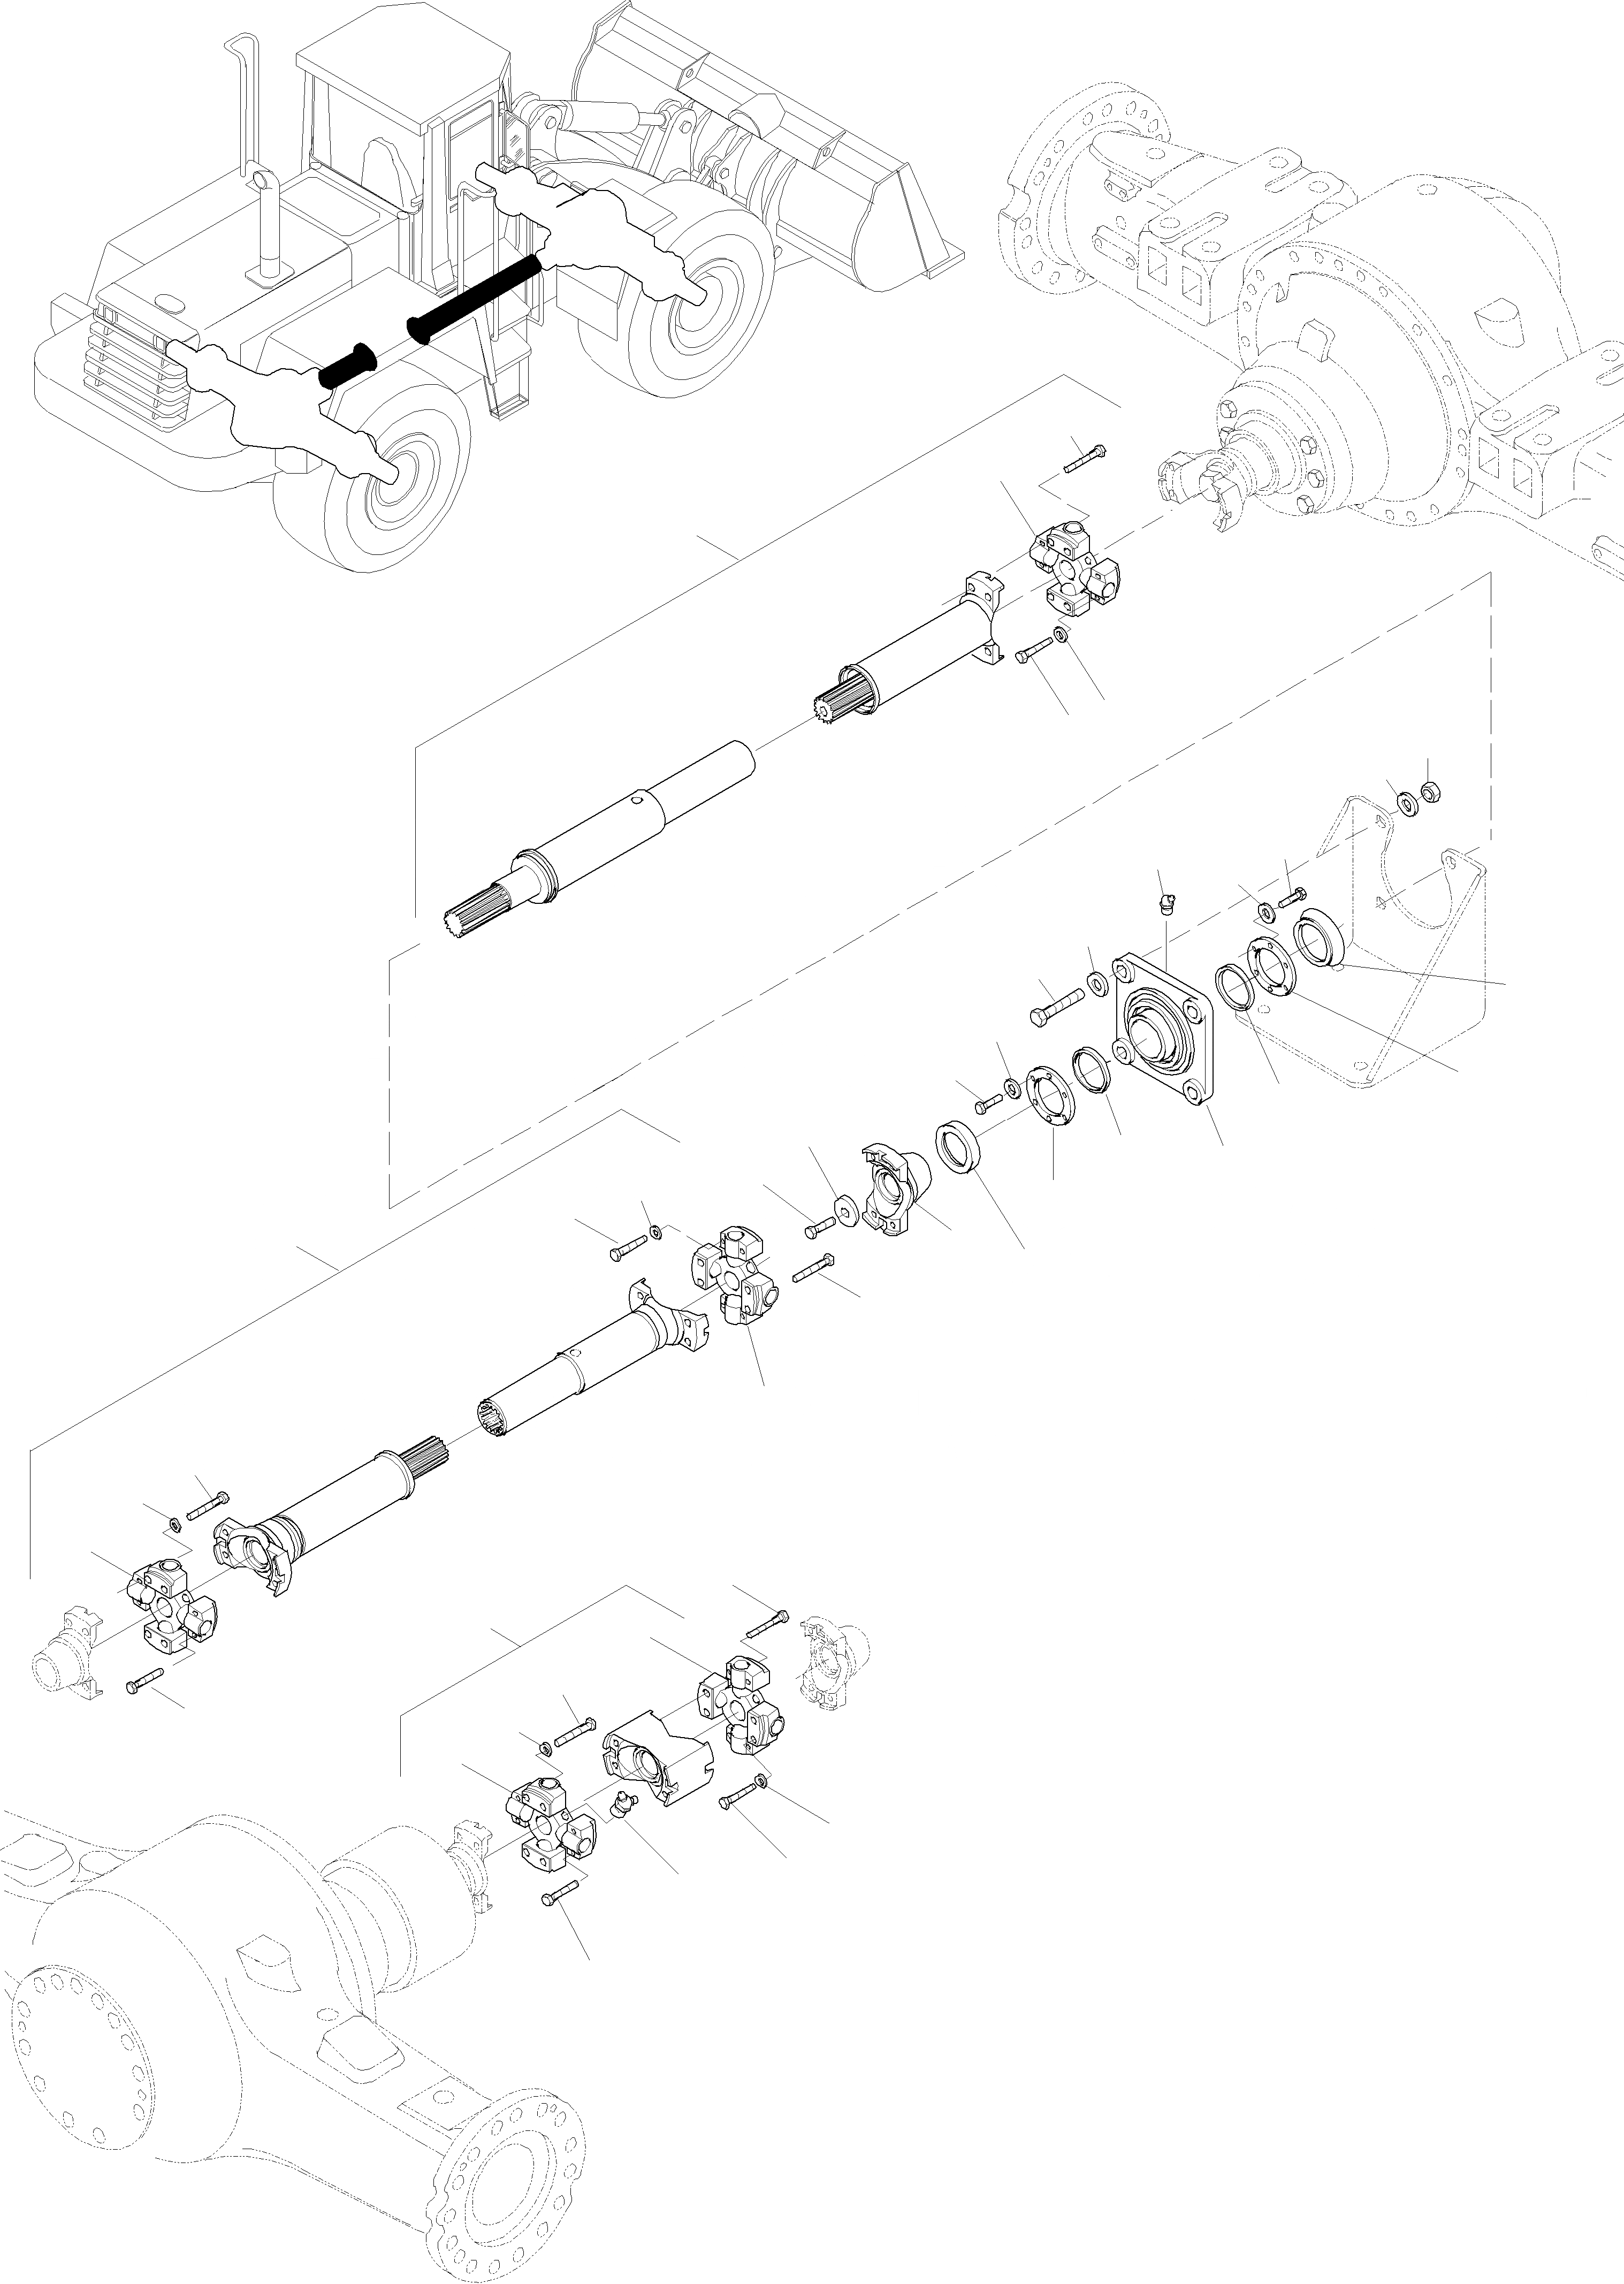 Схема запчастей Komatsu WA470-3 active - КРЕСТОВИНА ТРАНСМИССИЯ, КРЕСТОВИНА